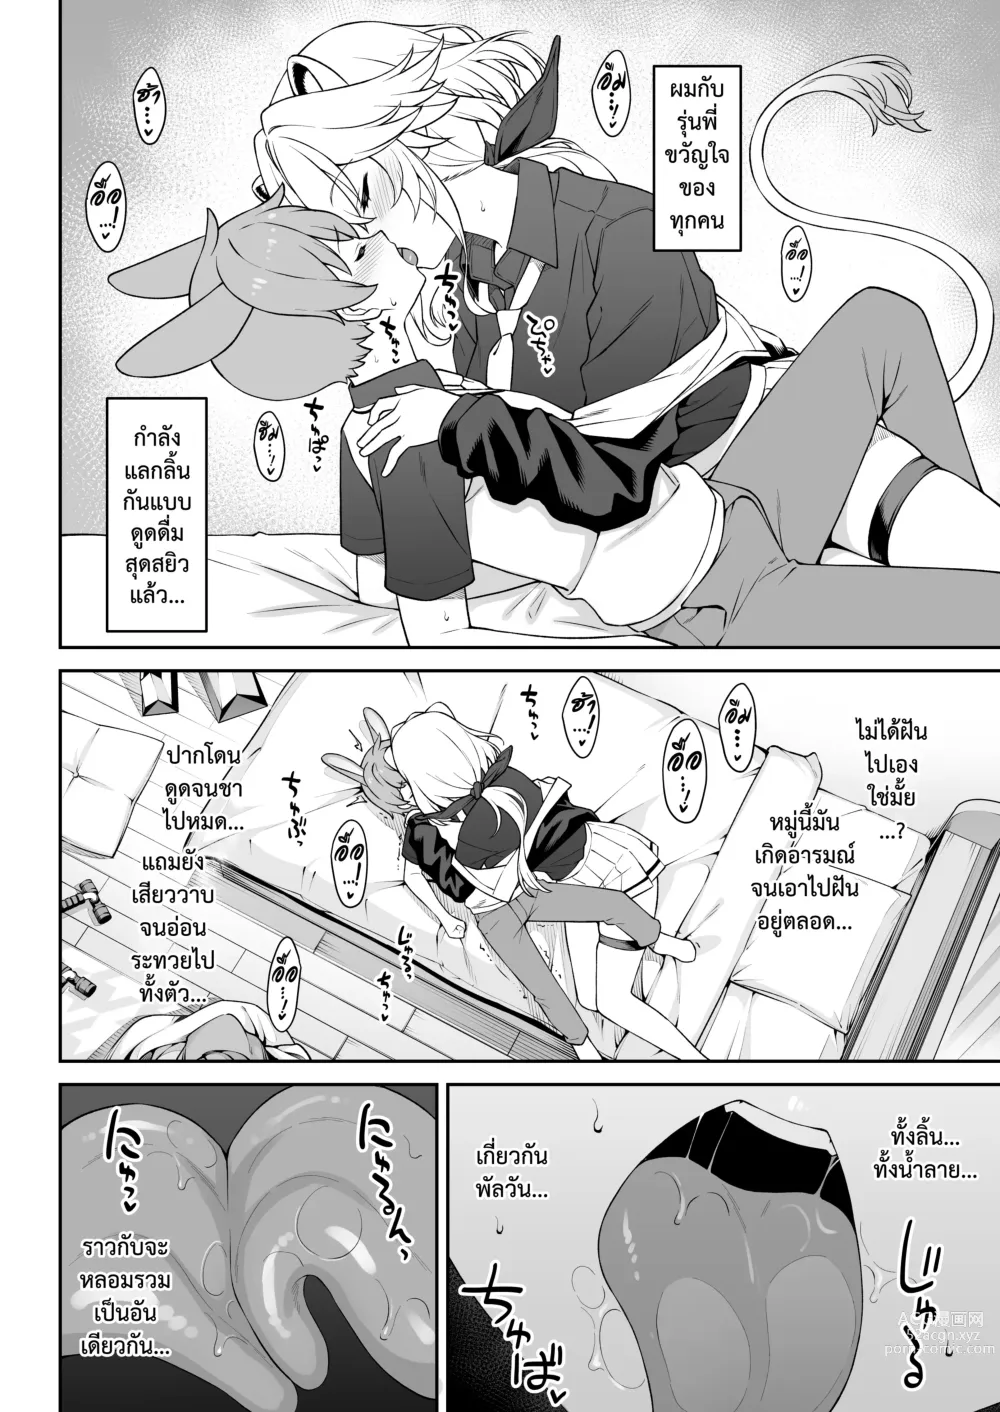 Page 21 of manga ชมรมสัตว์กินเนื้อ